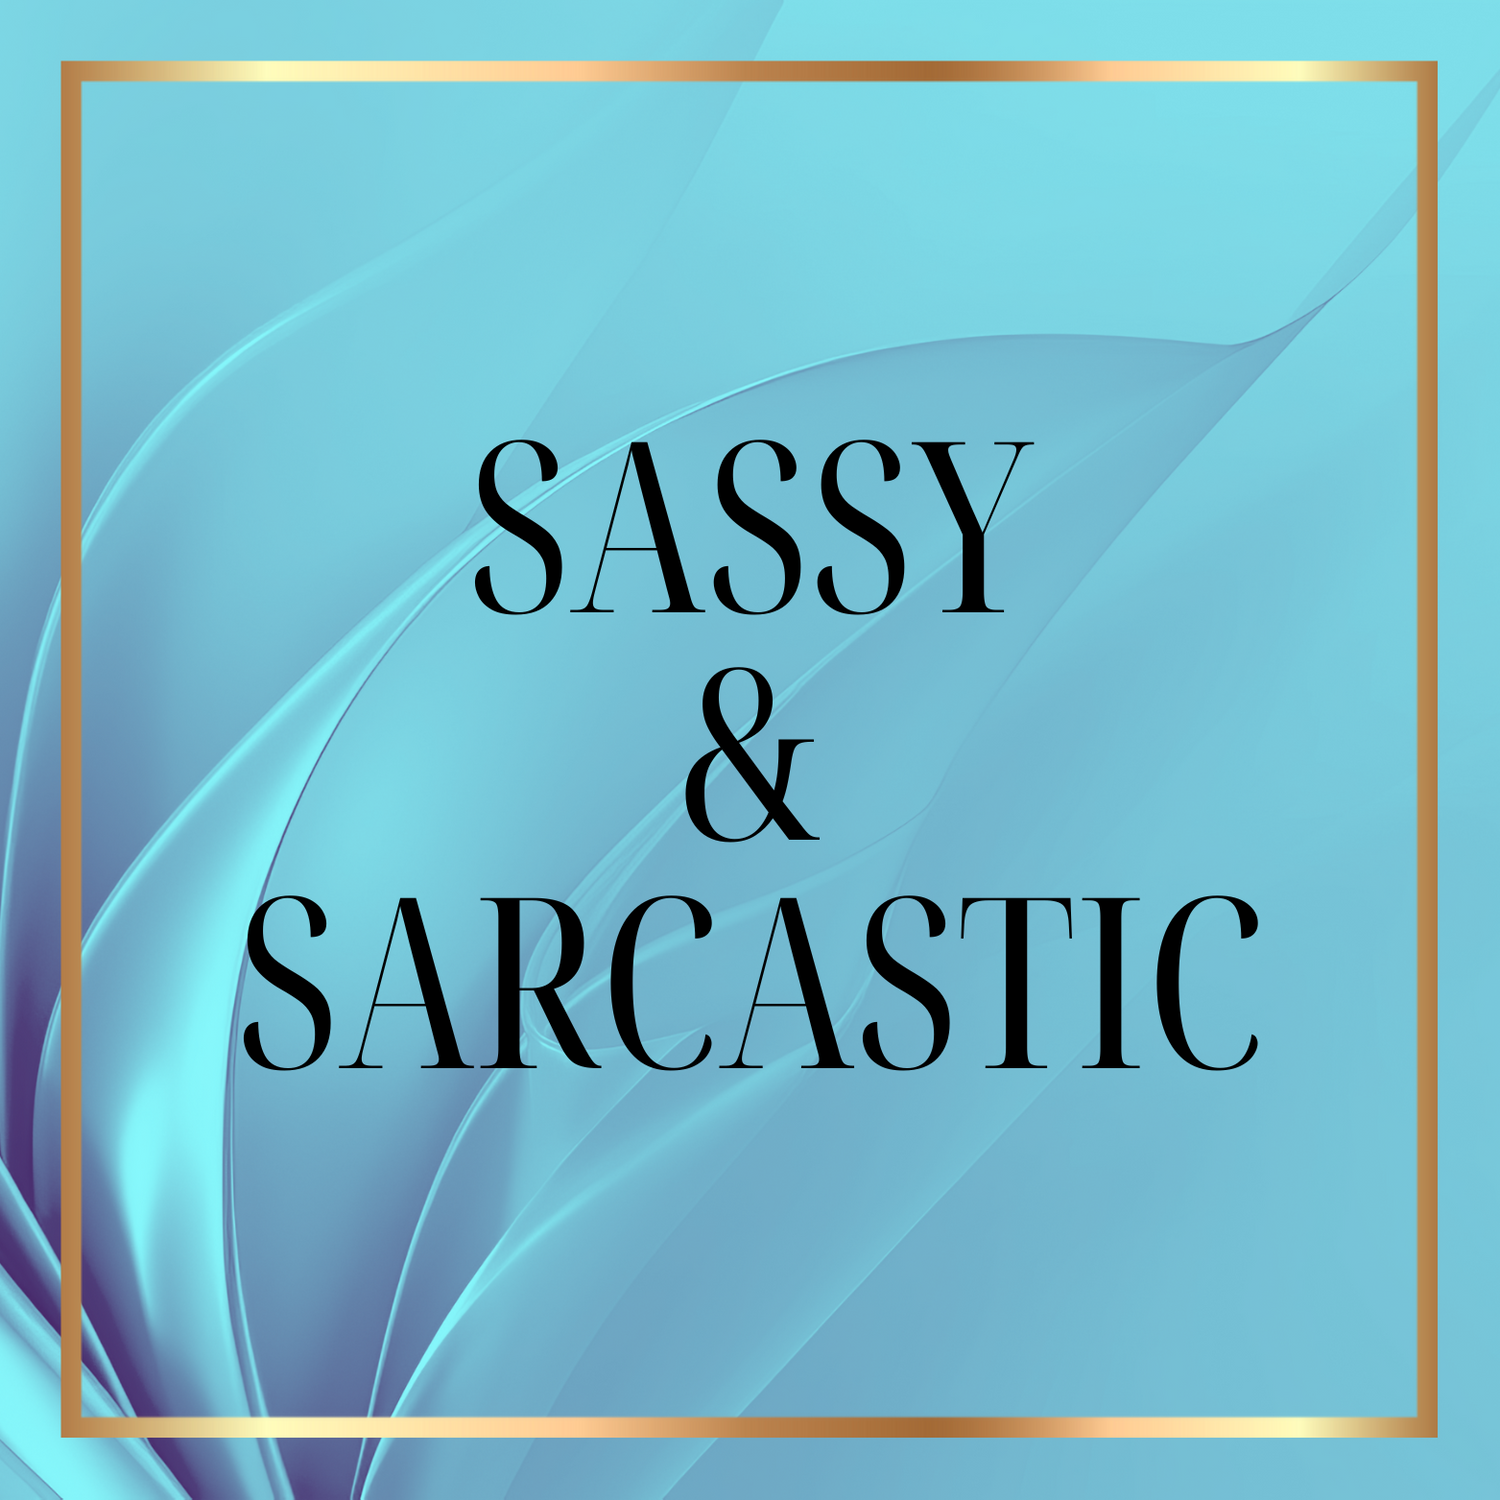 Sassy & Sarcastic